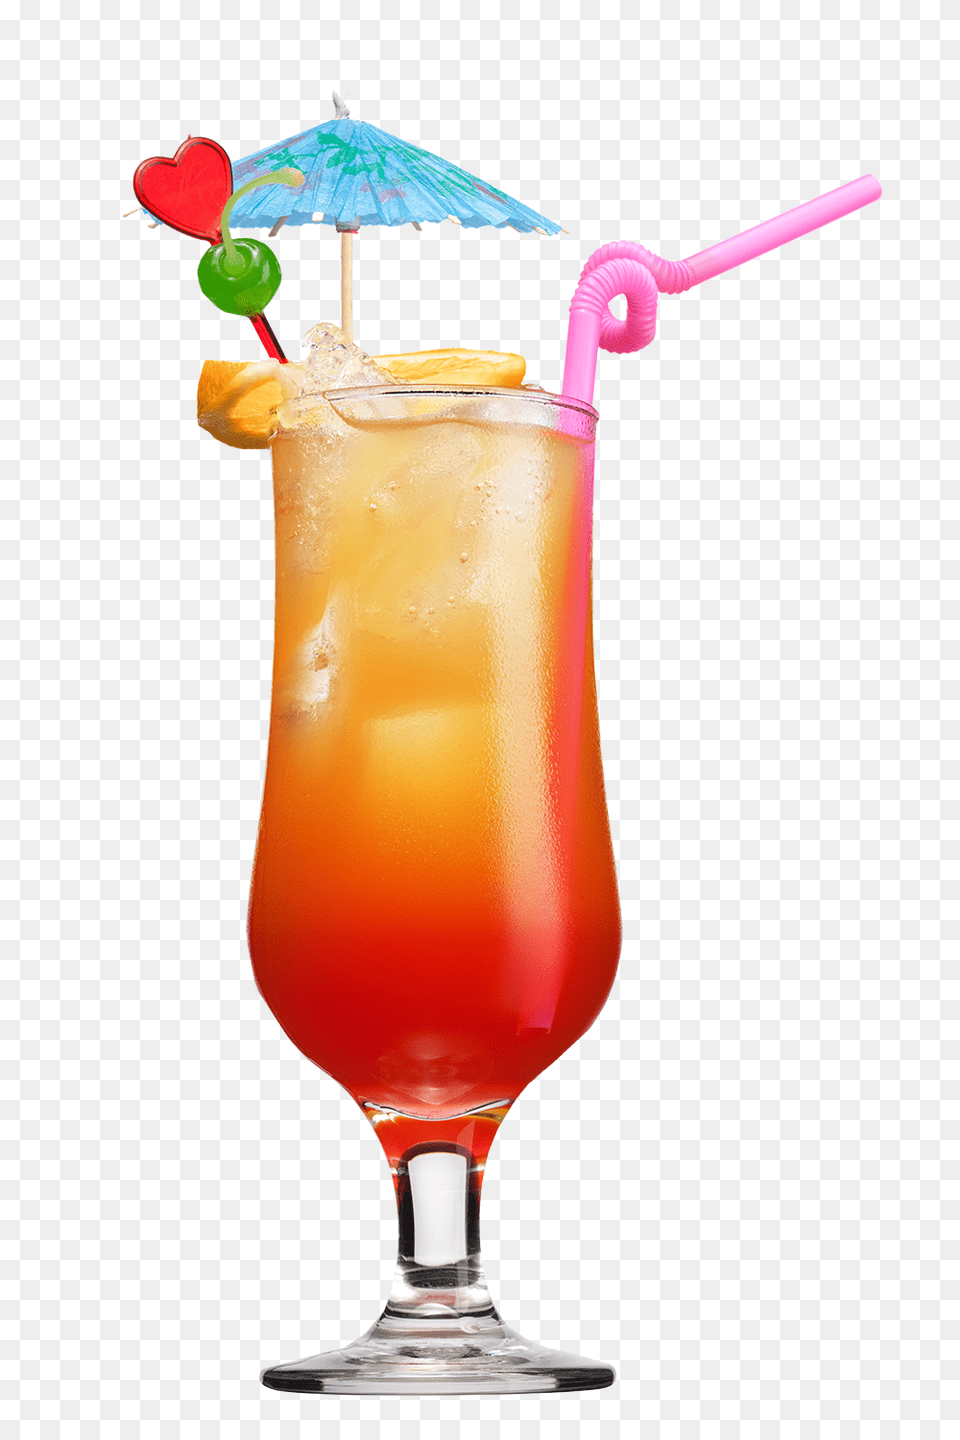 Drinks Drinks Images, Alcohol, Beverage, Cocktail, Glass Free Transparent Png